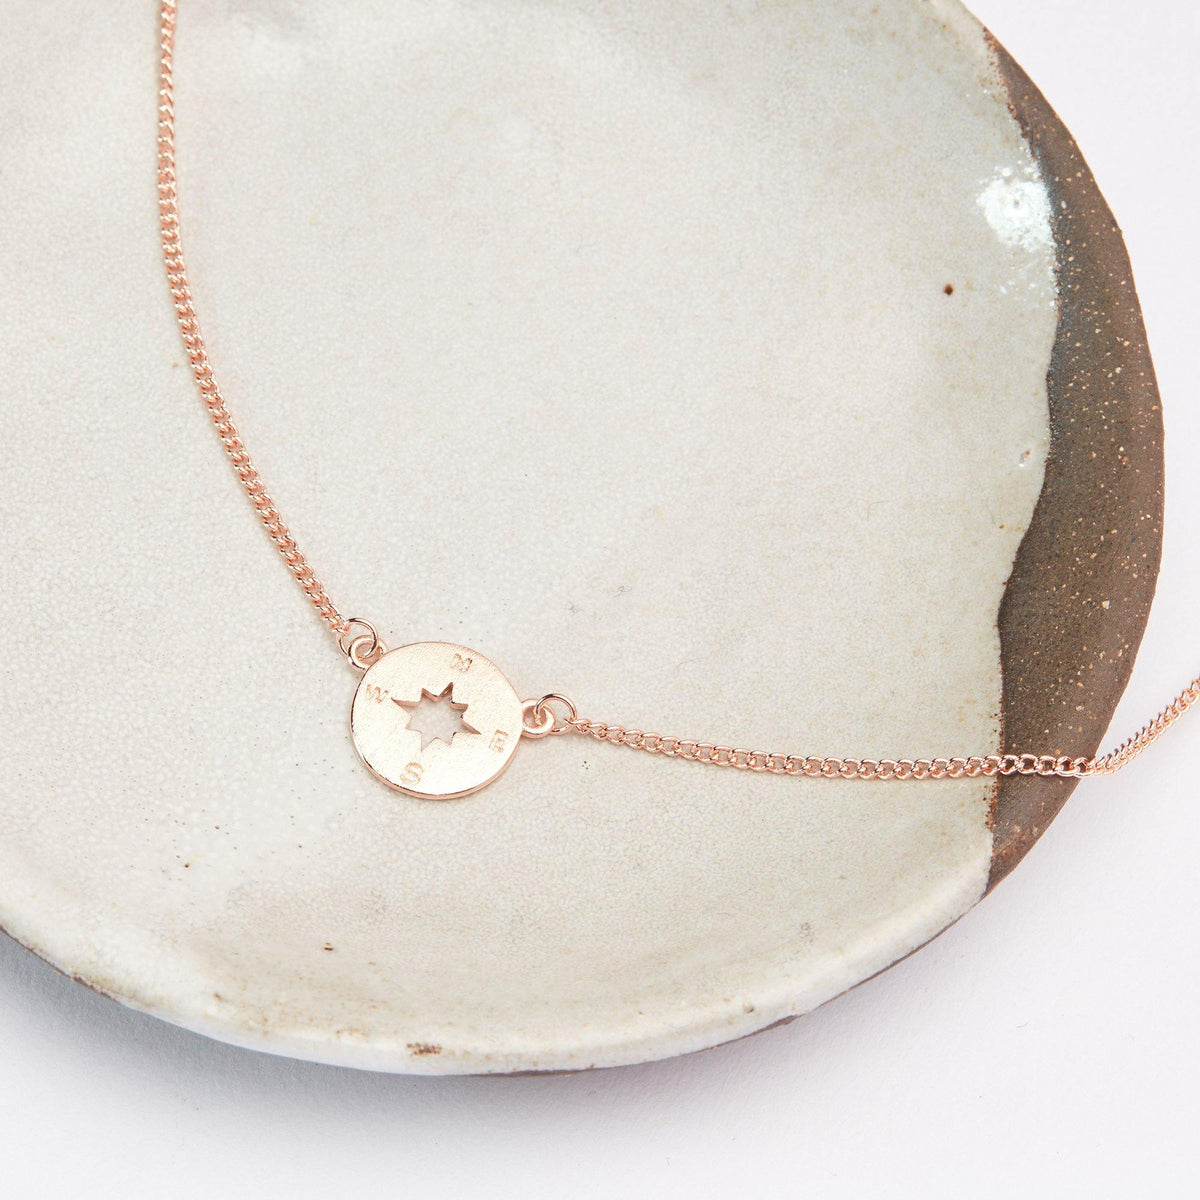 Pregnancy Necklace, Multiple Styles - Dear Ava, Jewelry / Necklaces / Pendants